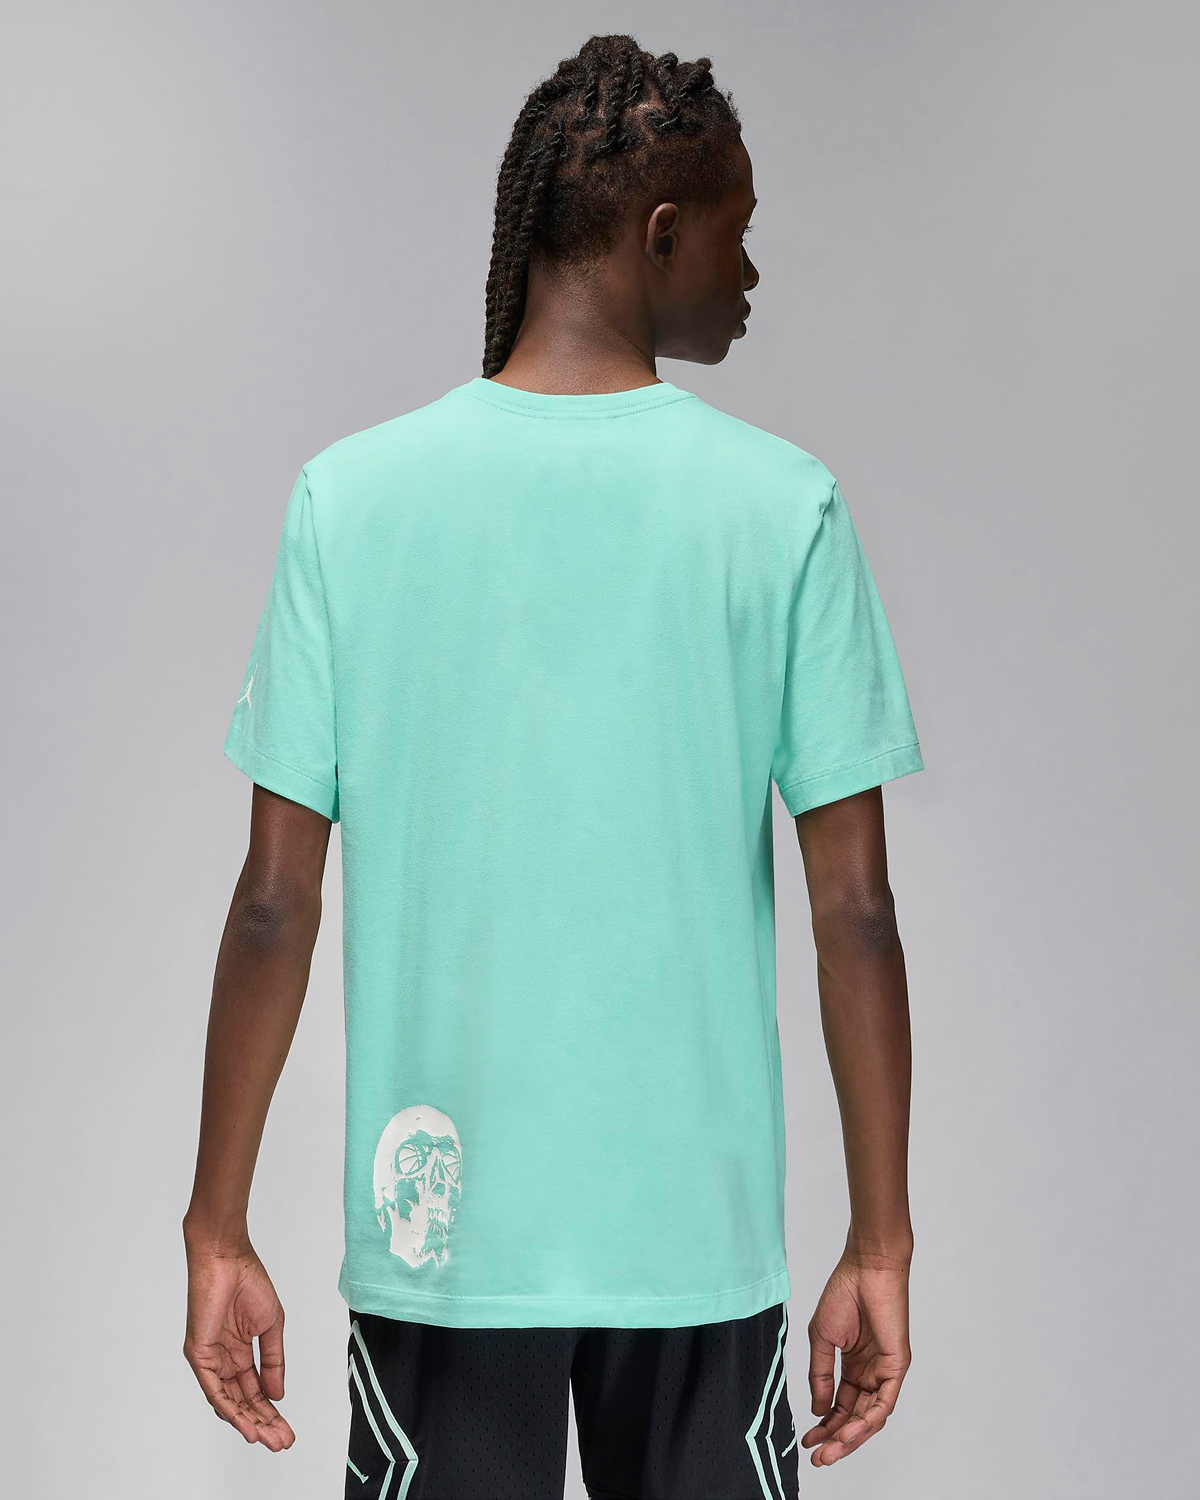 Air Jordan 1 High Green Glow Matching Shirt Outfit